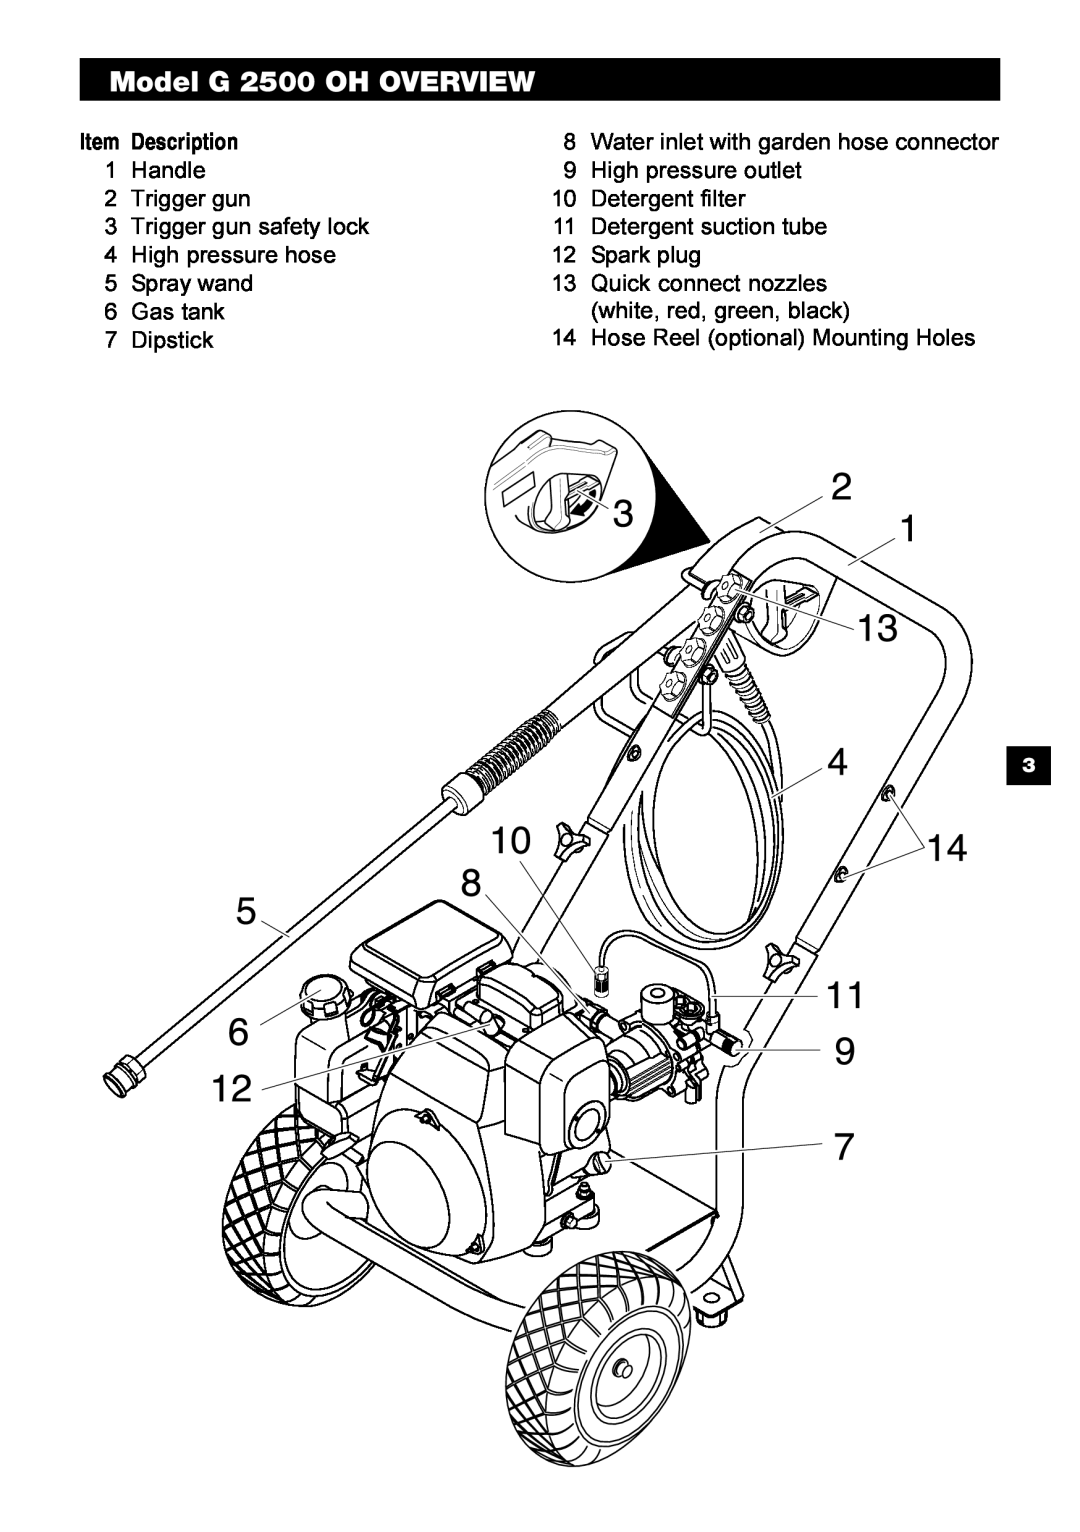 Karcher manual Model G 2500 OH OVERVIEW, Description 